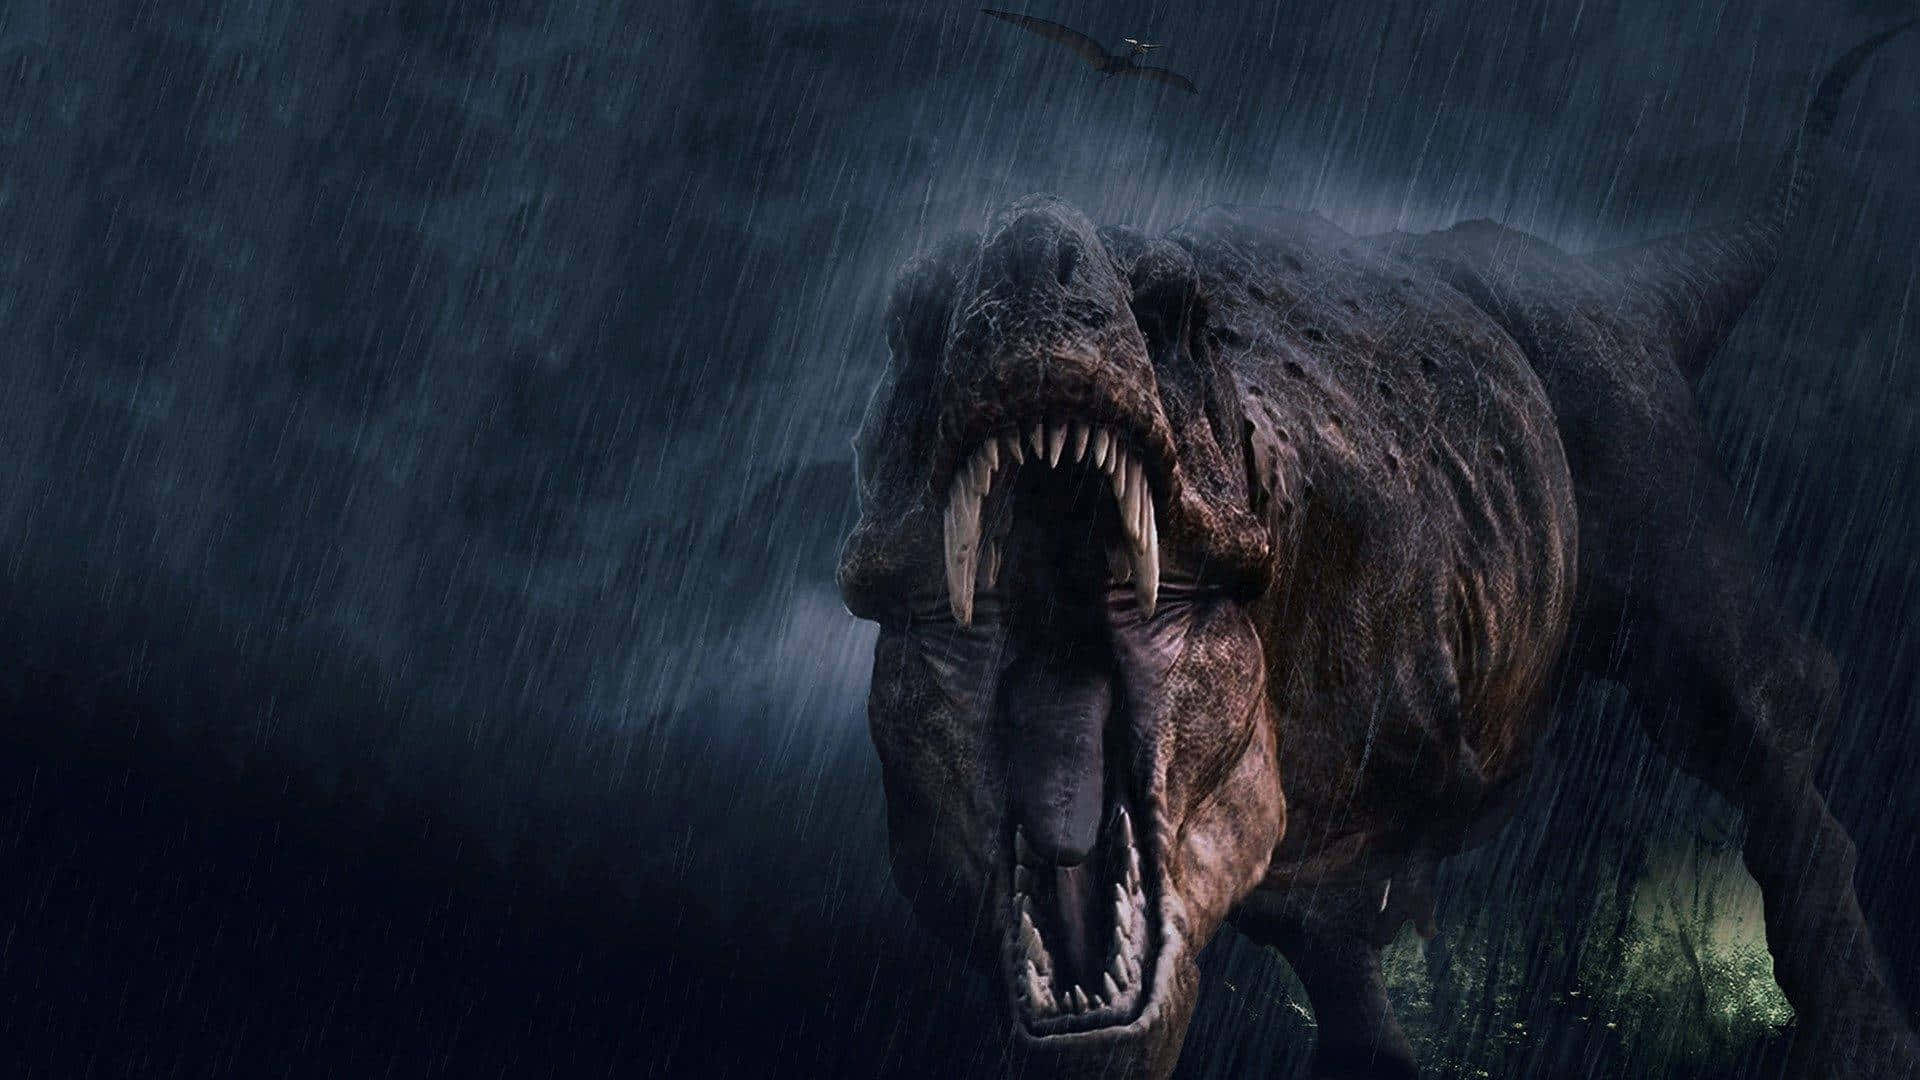 Witness the roaring dinosaurs of Jurassic World!